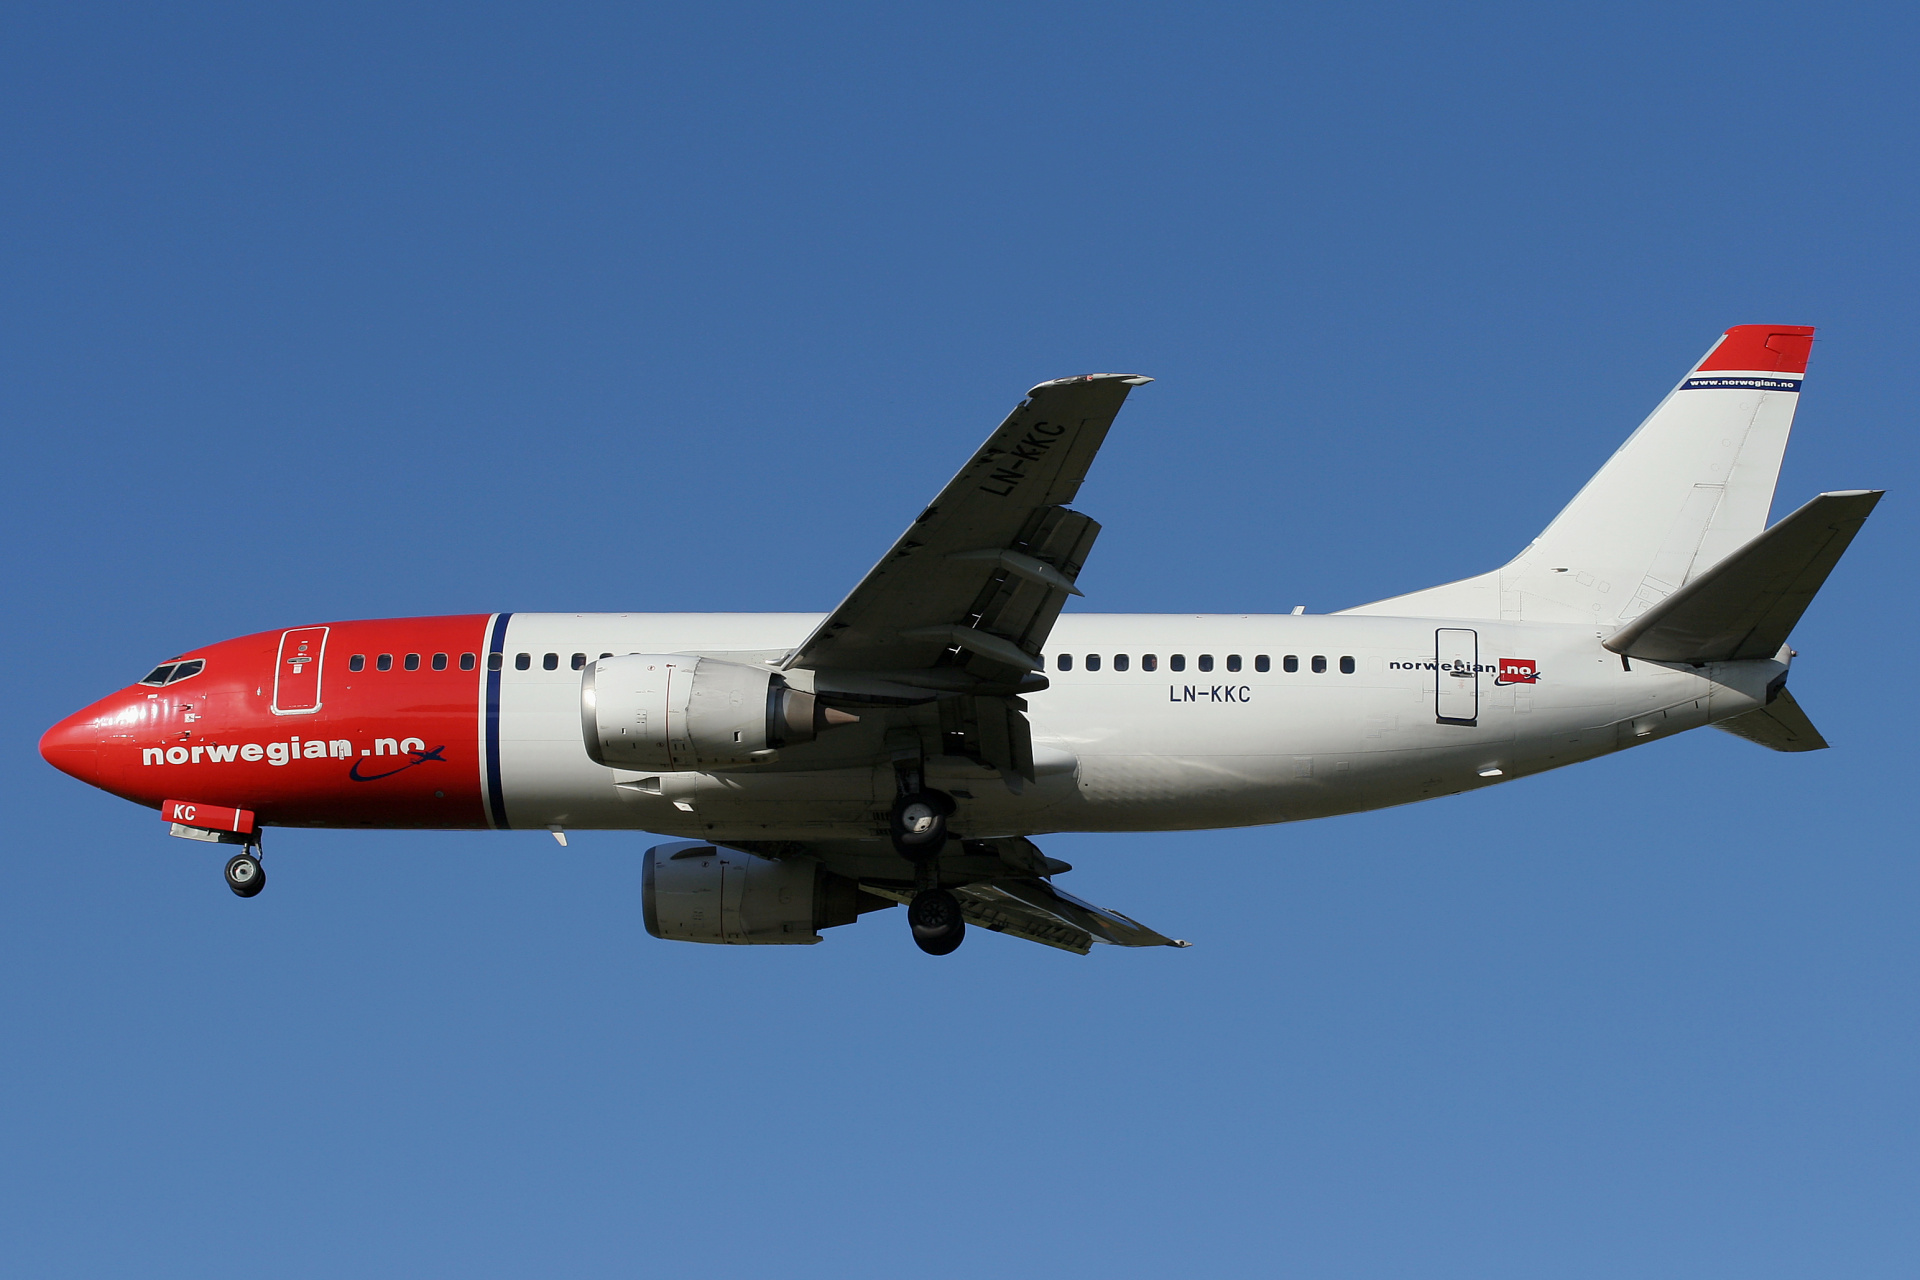 LN-KKC (Aircraft » EPWA Spotting » Boeing 737-300 » Norwegian Air Shuttle)